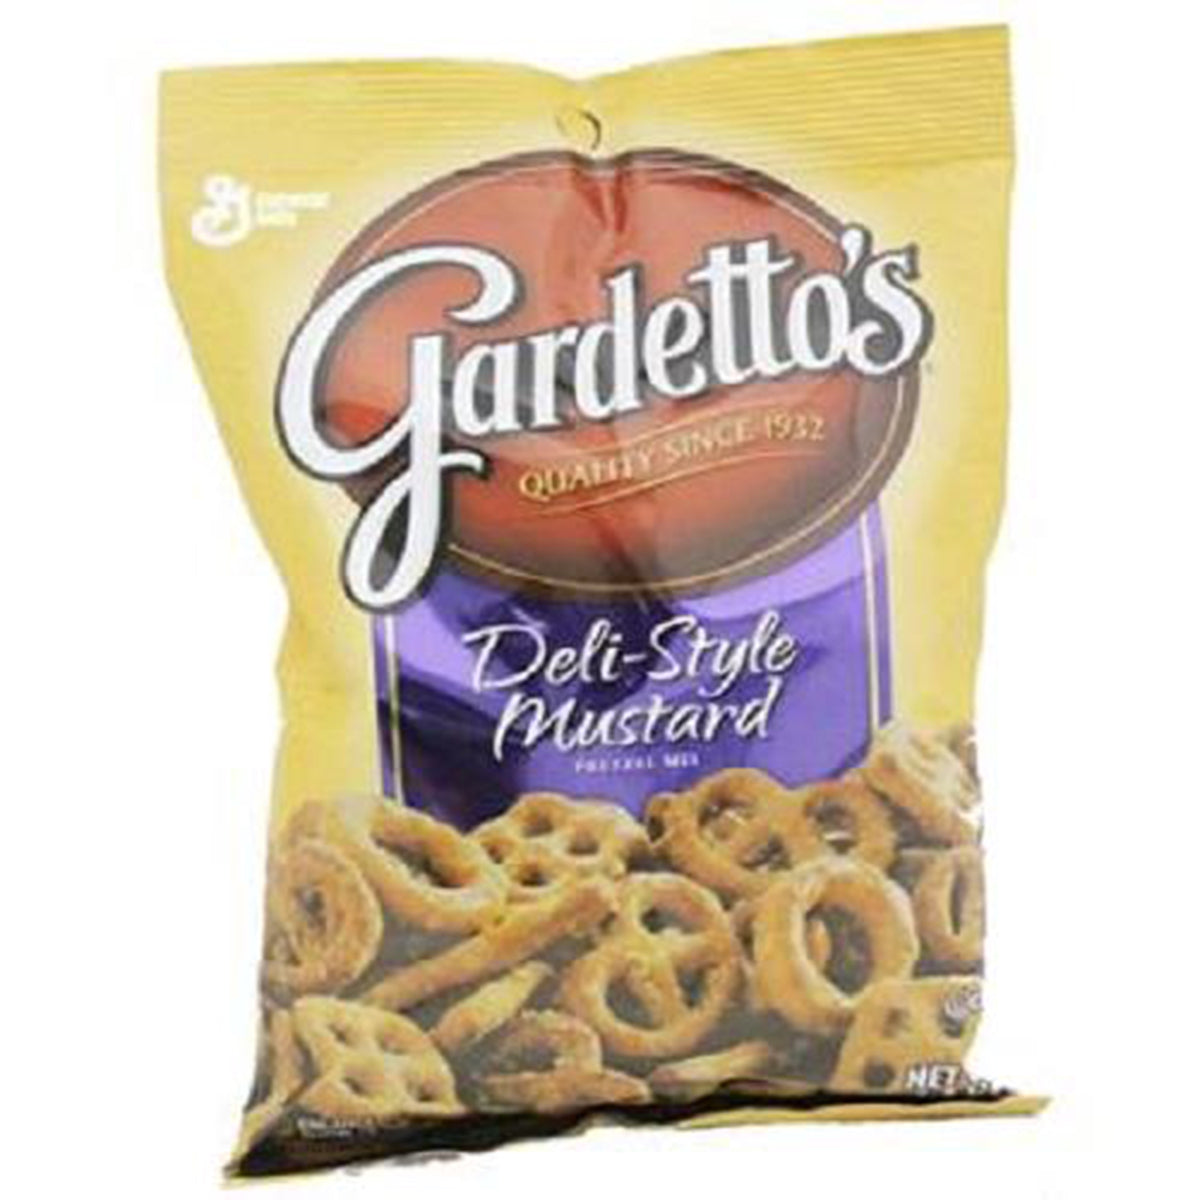 Product Of Gardettos, Deli Style Mustard Pretzel, Count 7- Snacks / Grab Varieties & Flavors